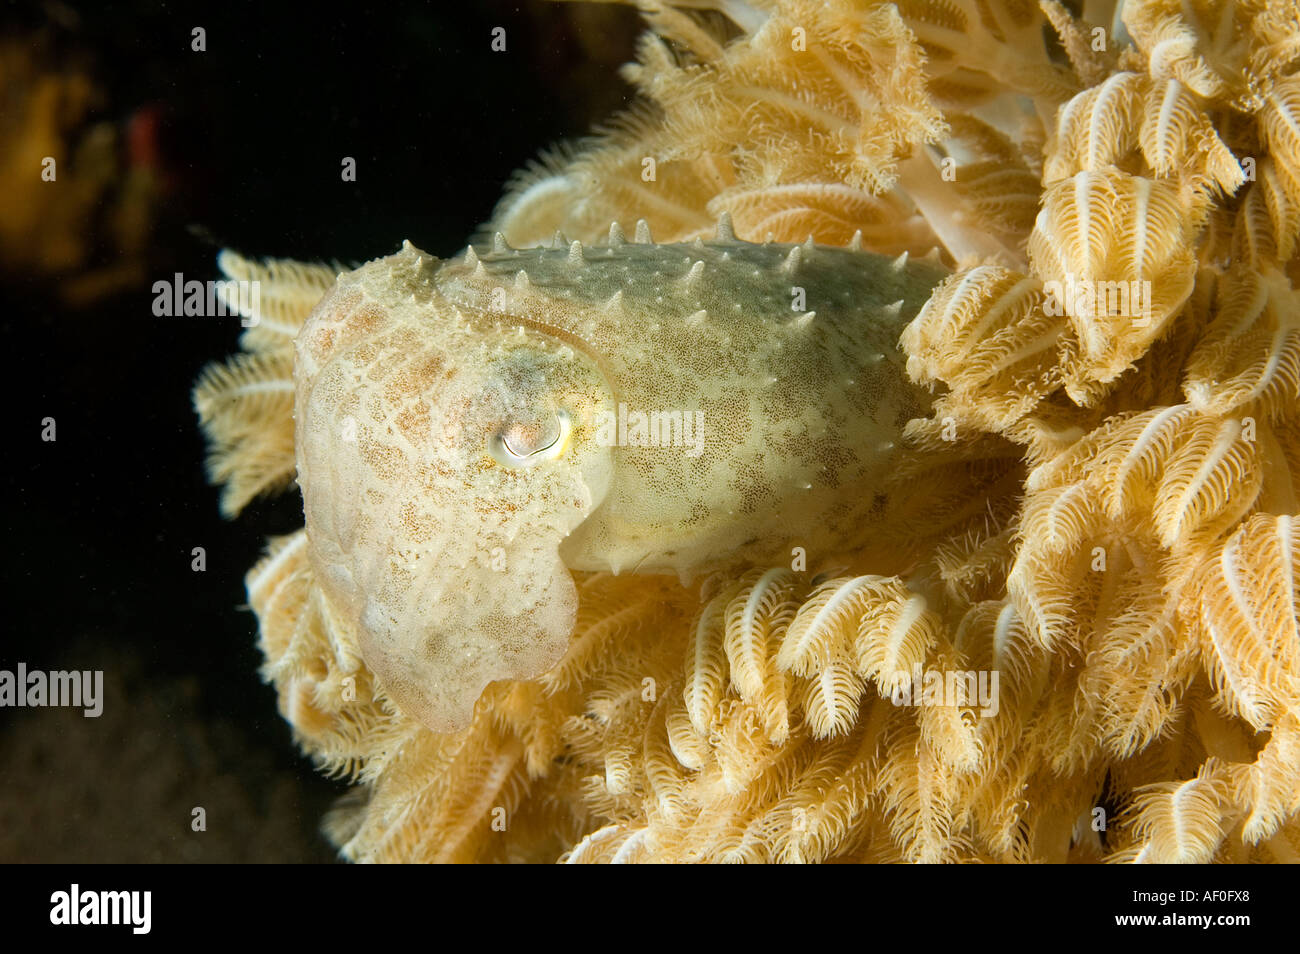 Juvenile cuttlefish, Sepia latimanus, hiding between soft coral tentacles, Bali Indonesia. Stock Photo